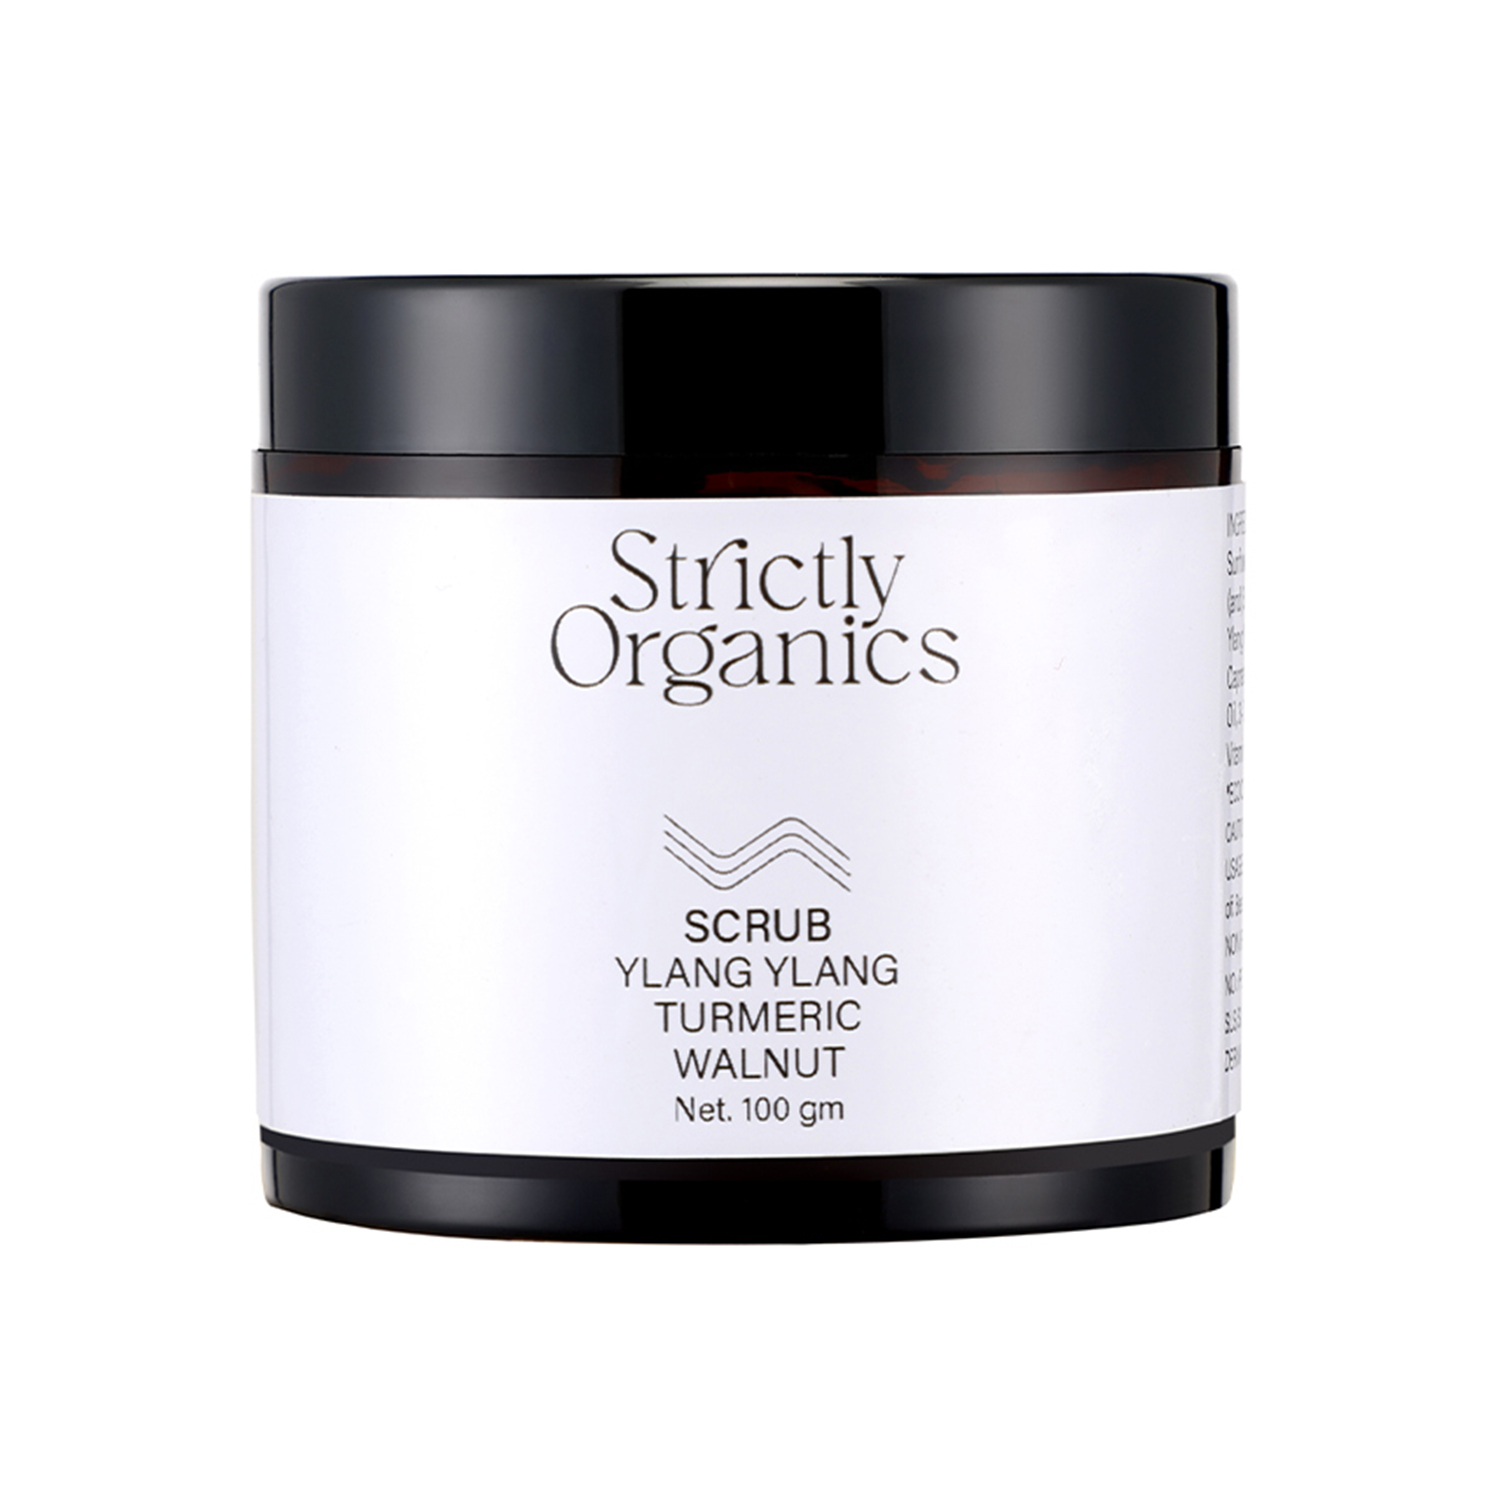 Strictly Organics - Walnut Body Scrub with Turmeric Oil, Apricot Oil, Vitamin C, Niacinamide and Ylang Ylang